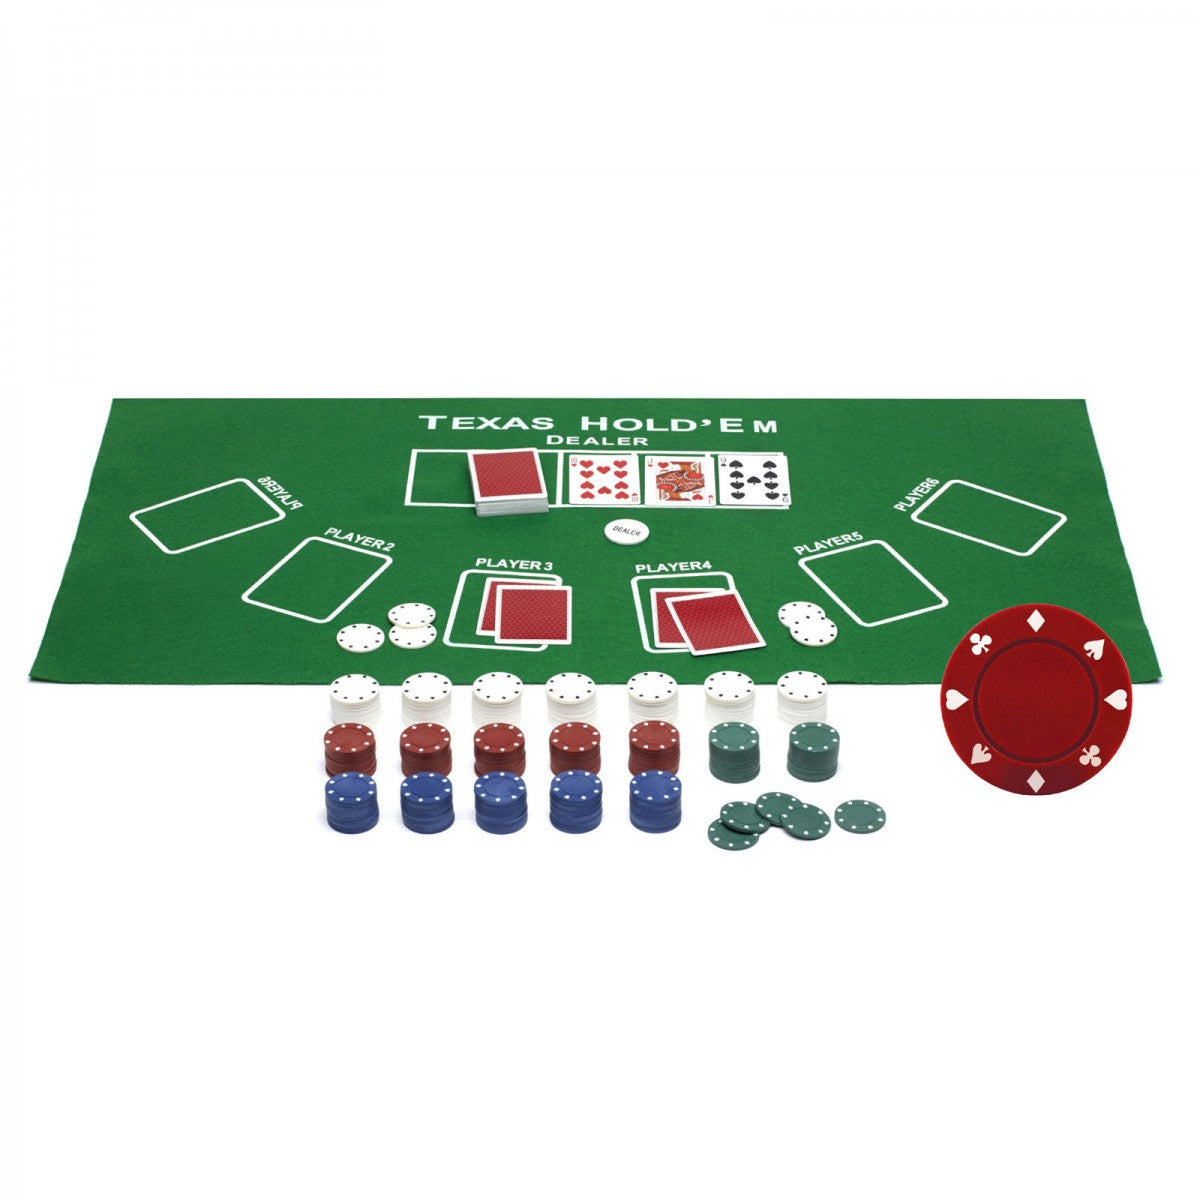 Merchant Ambassador Adult Classic Games Texas Hold'em Poker - Fun Board Games